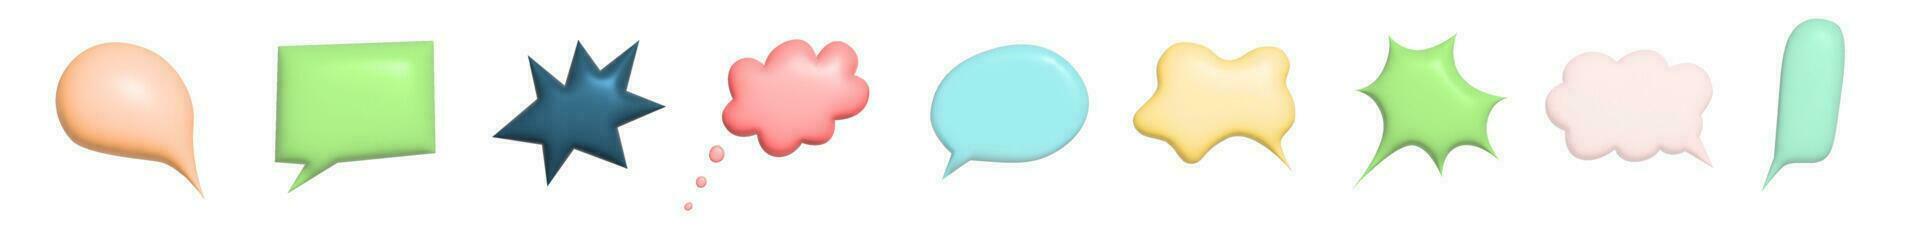 Set of blank color speech bubble vector illustration. 3d vector talking cloud.